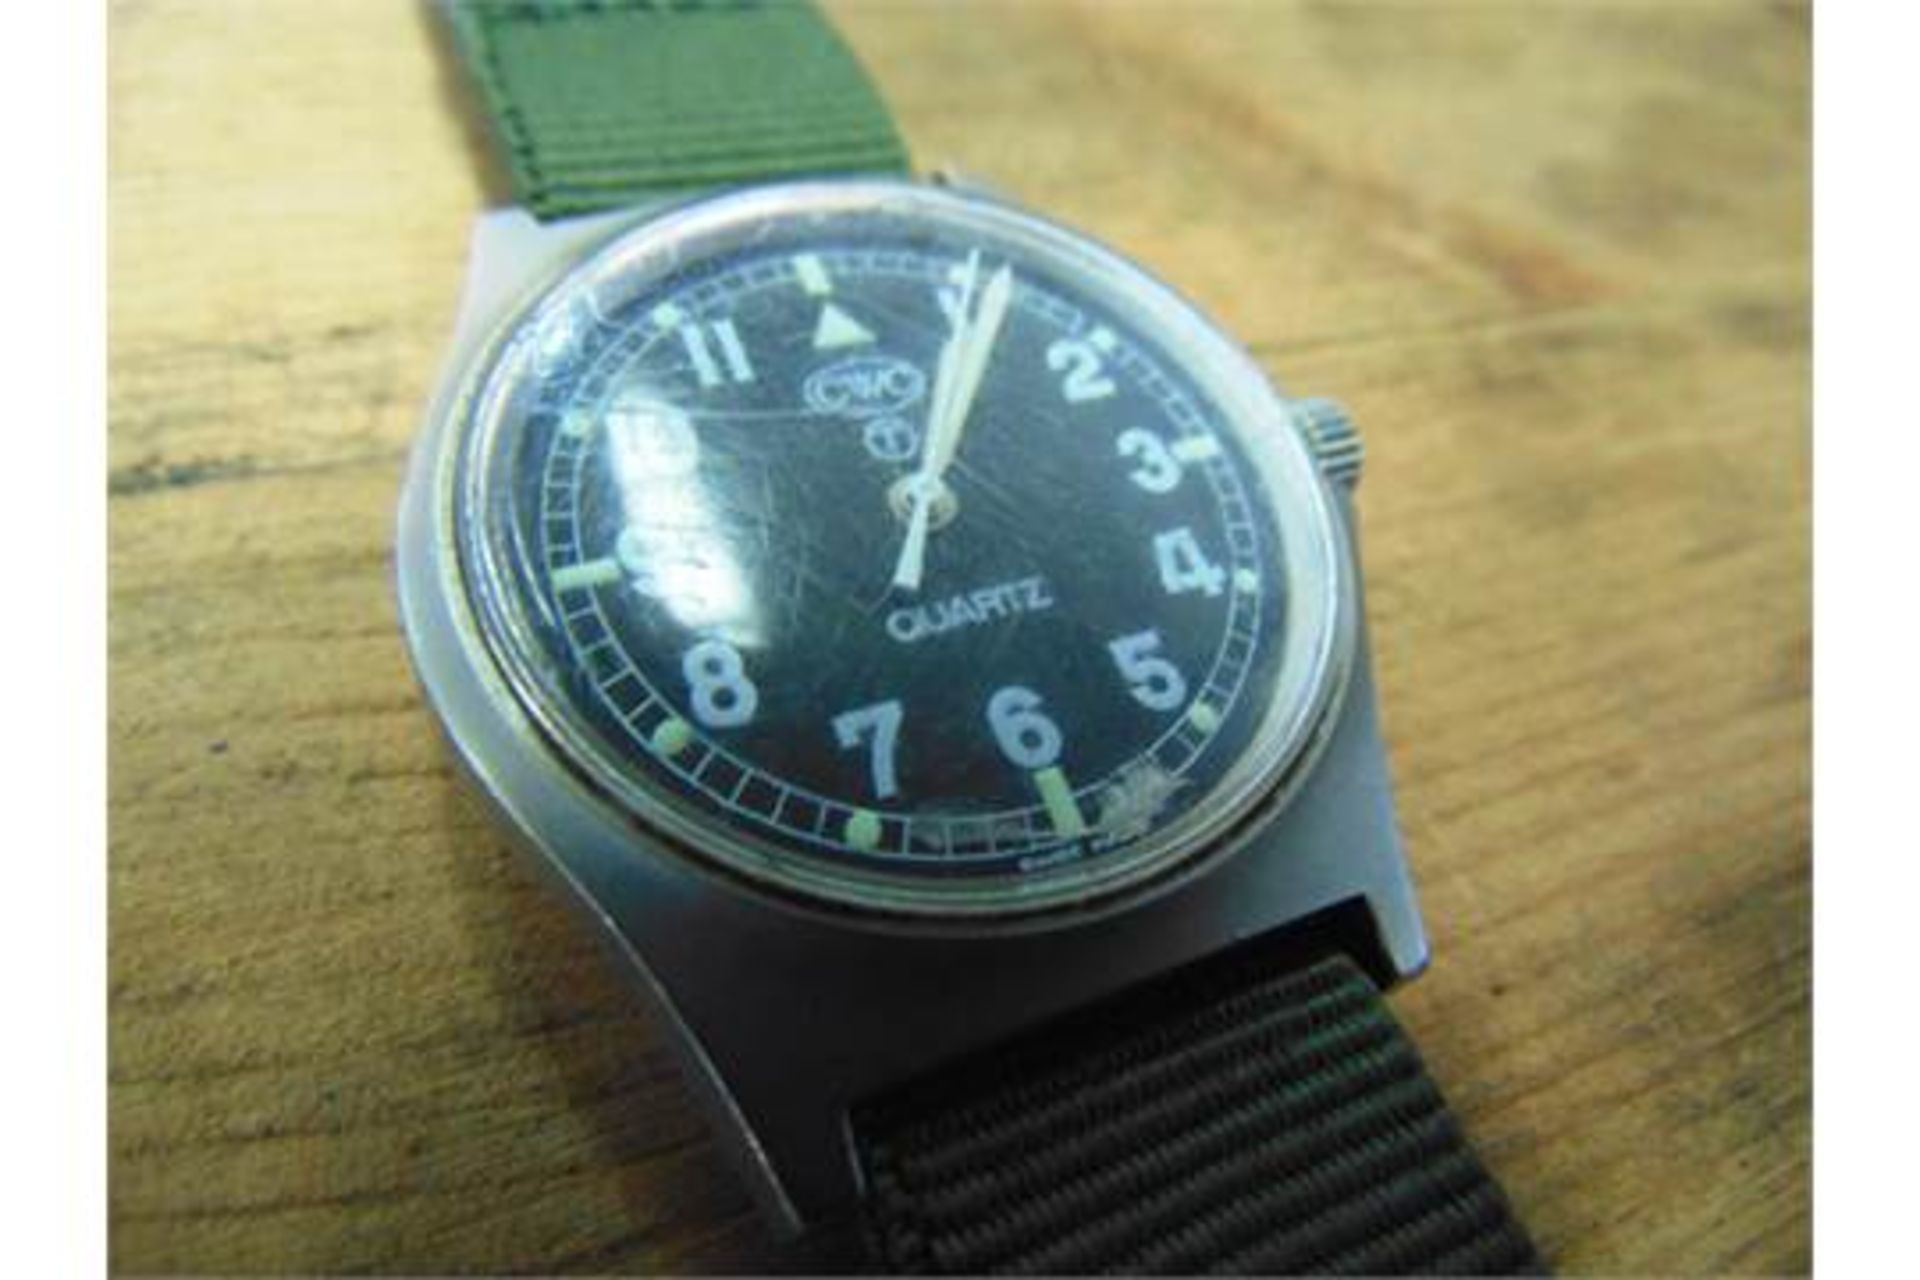 Genuine British Army, CWC Quartz Wrist Watch - Image 4 of 6